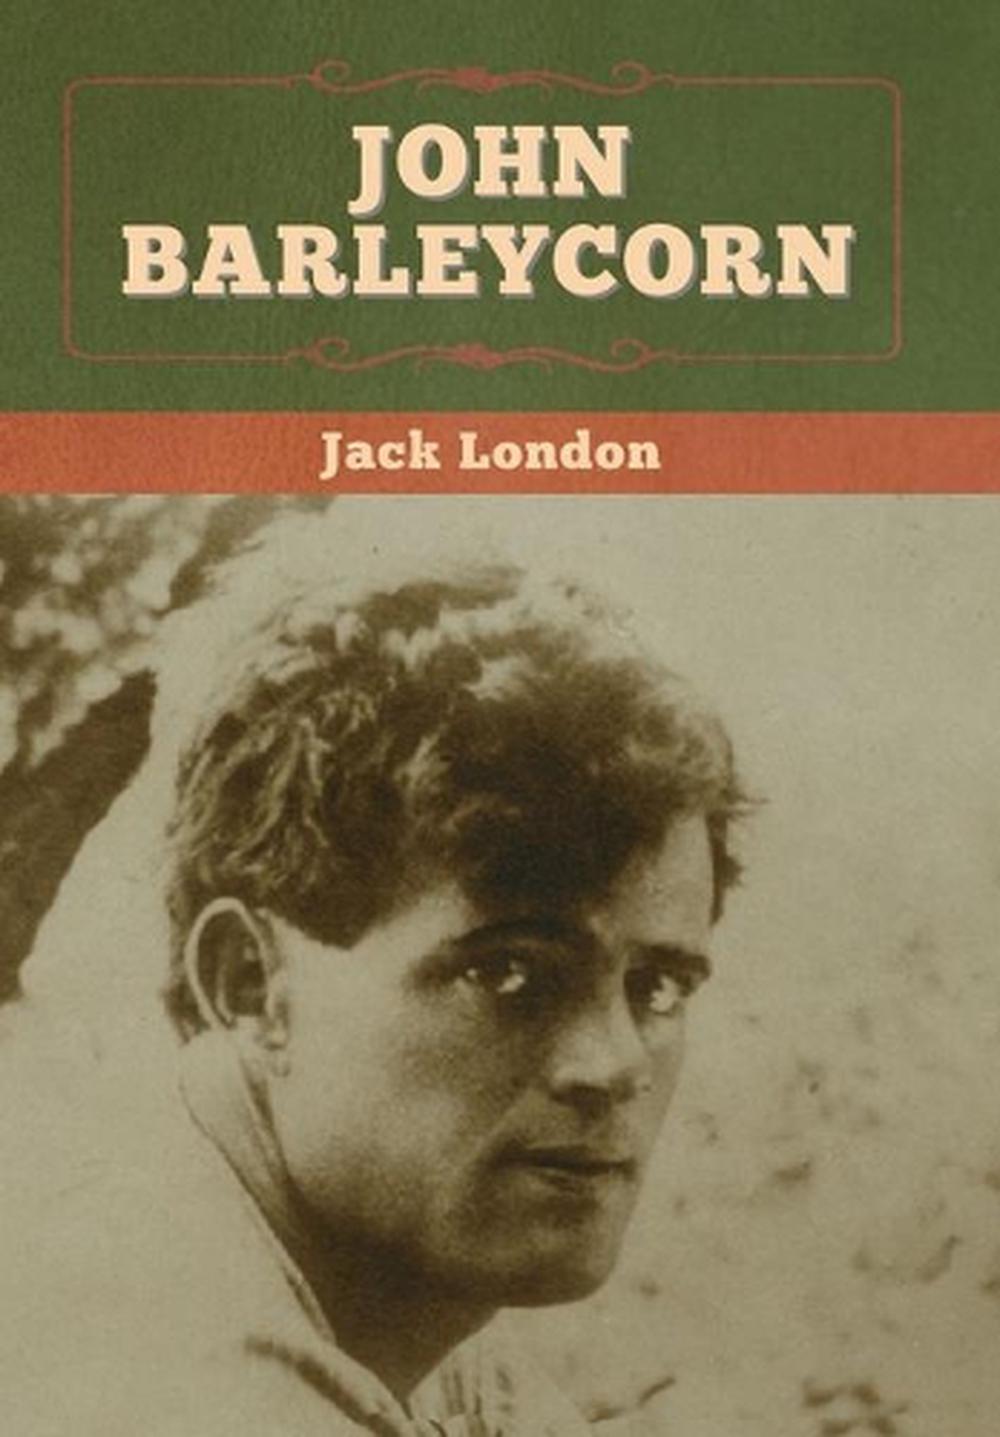 john barleycorn by jack london